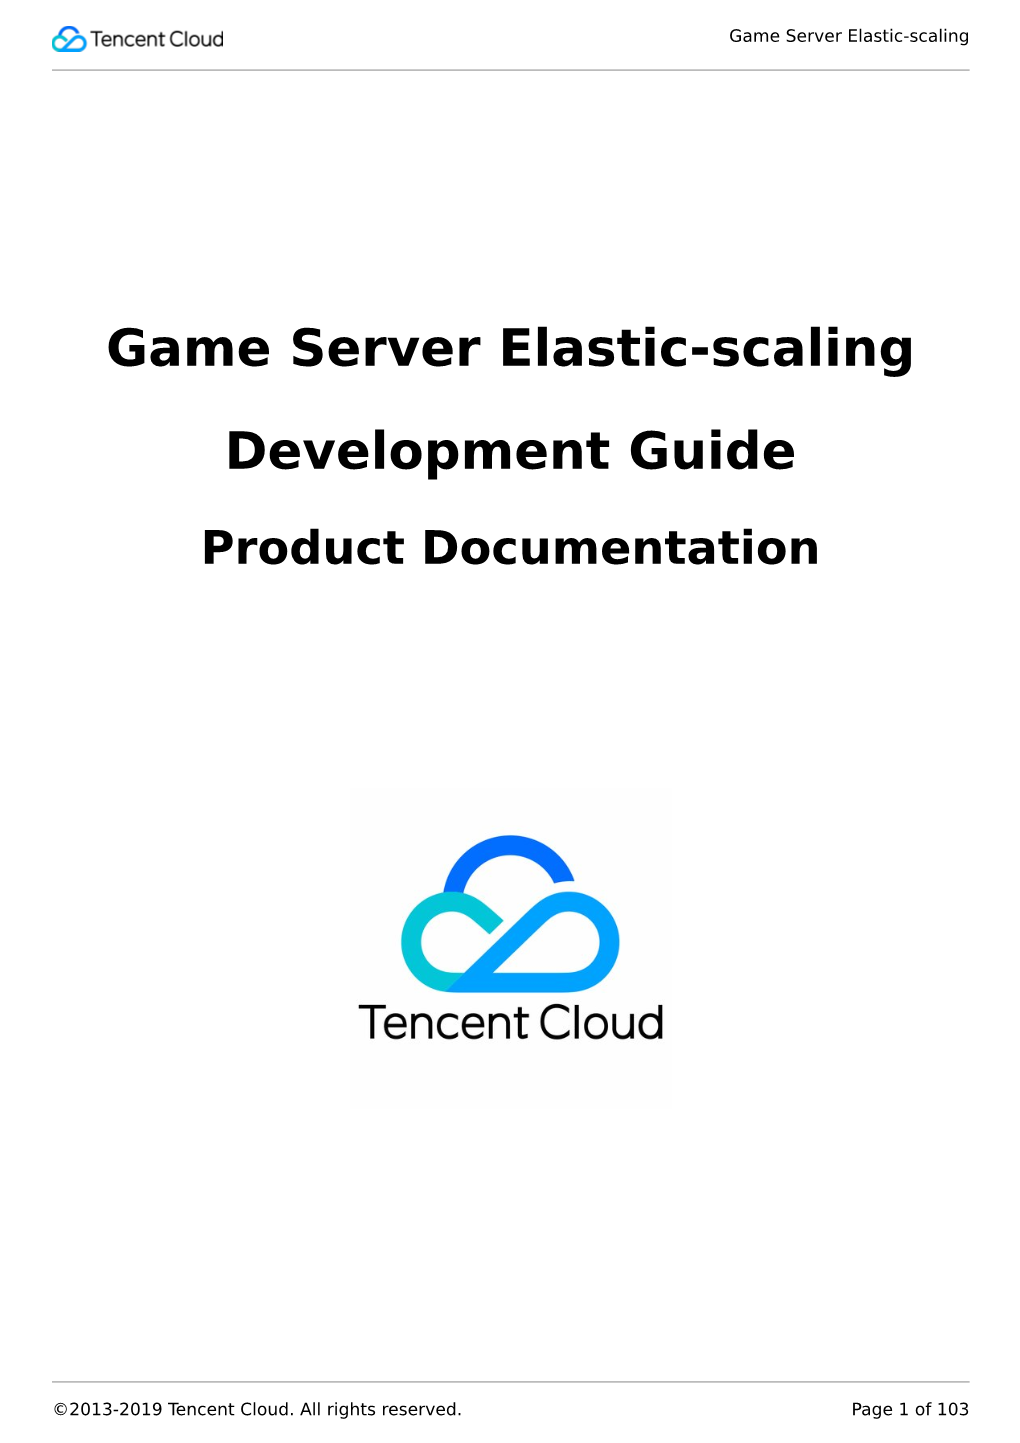 Game Server Elastic-Scaling Development Guide